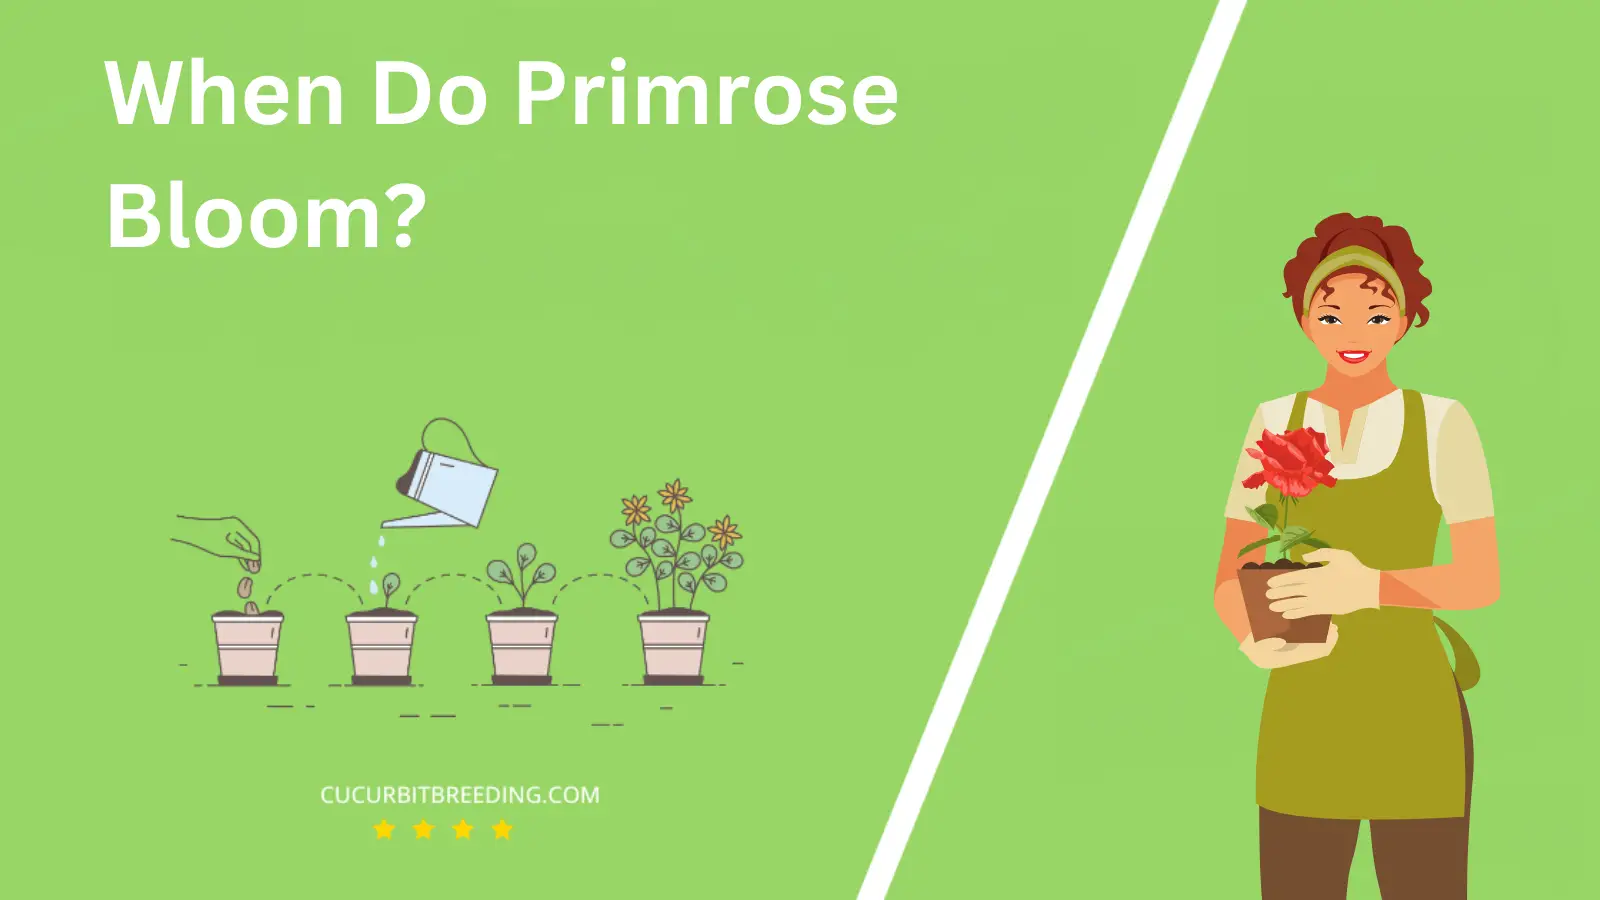 When Do Primrose Bloom?